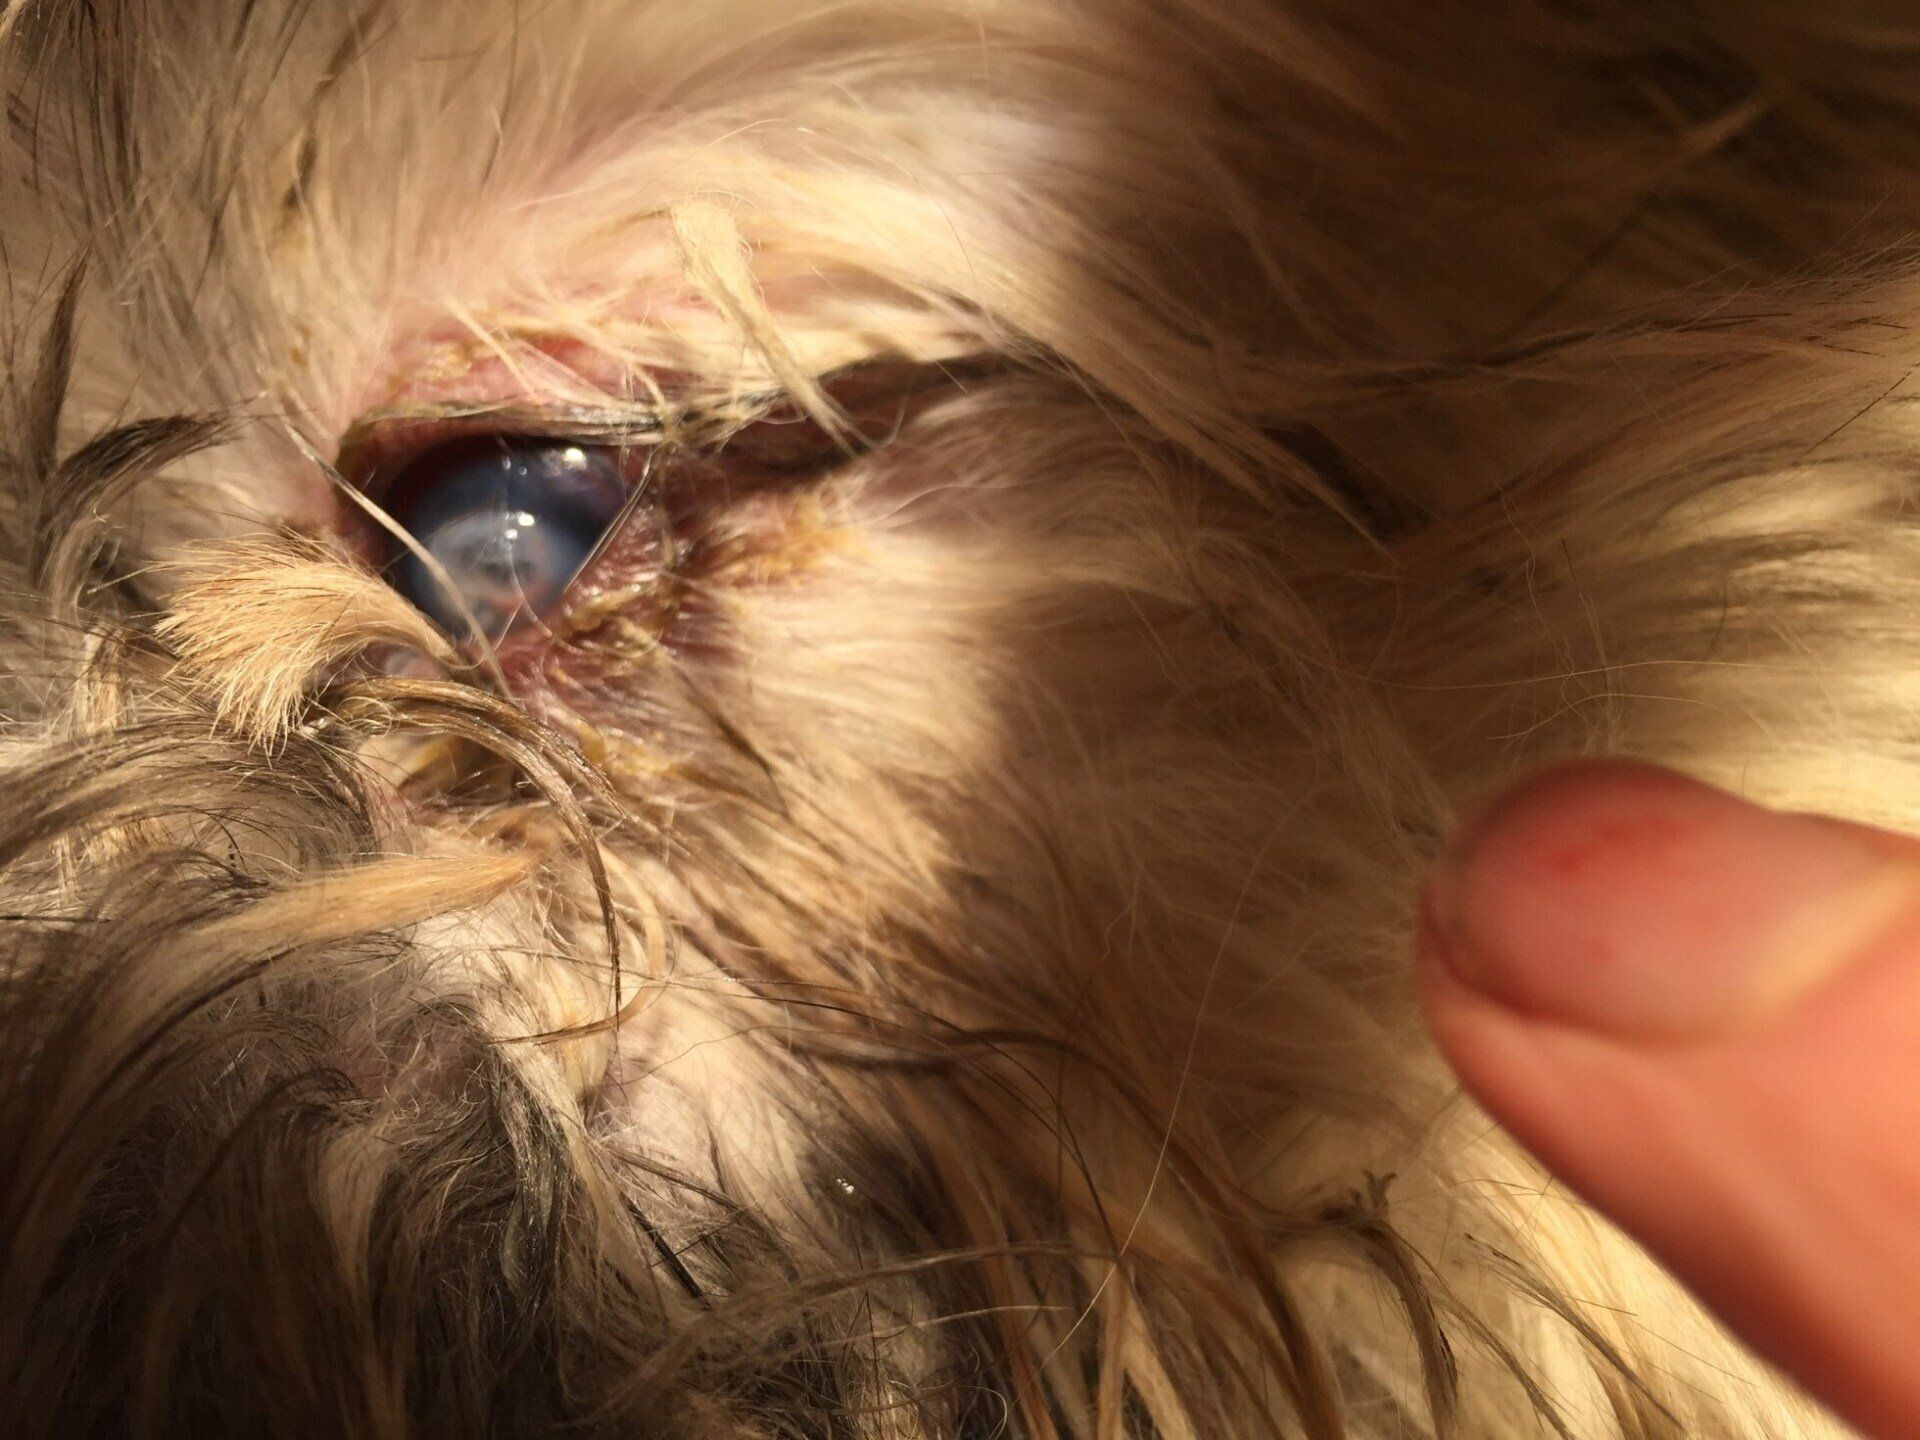 hund med beskadiget øje